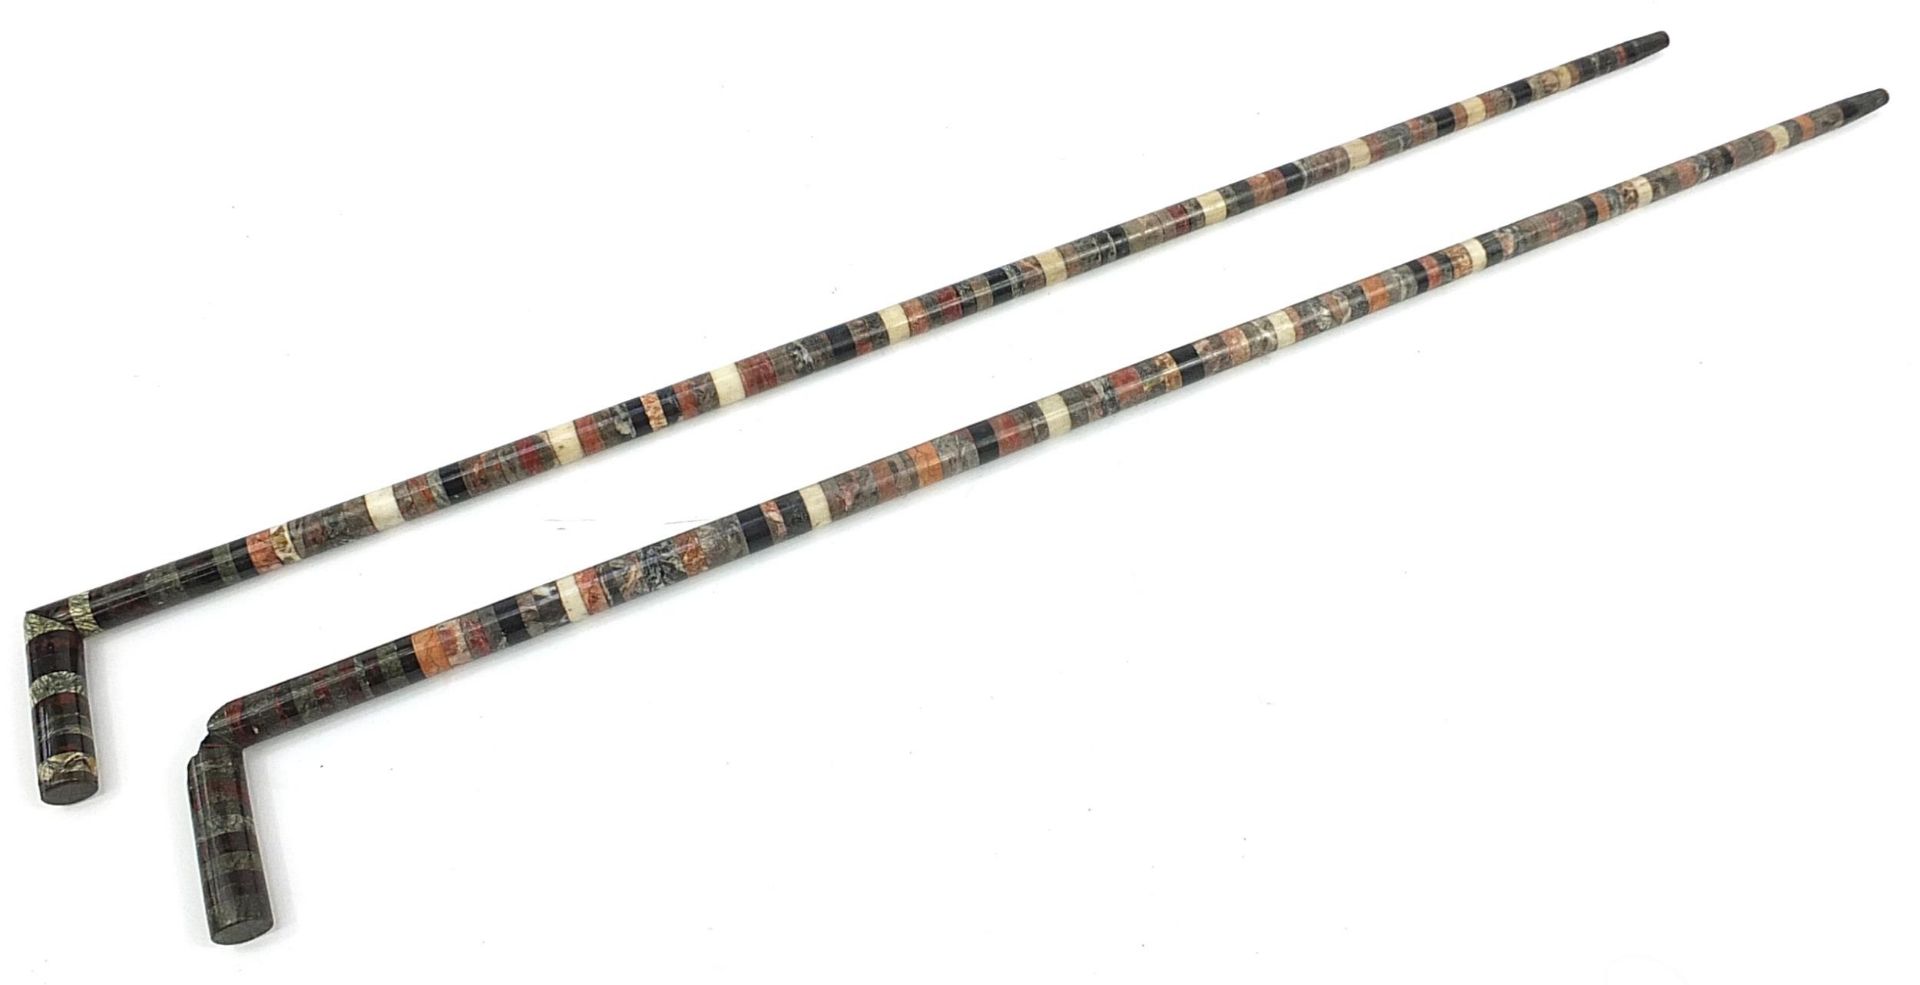 Pair of specimen marble sectional walking sticks, each 89.5cm in length - Image 3 of 3